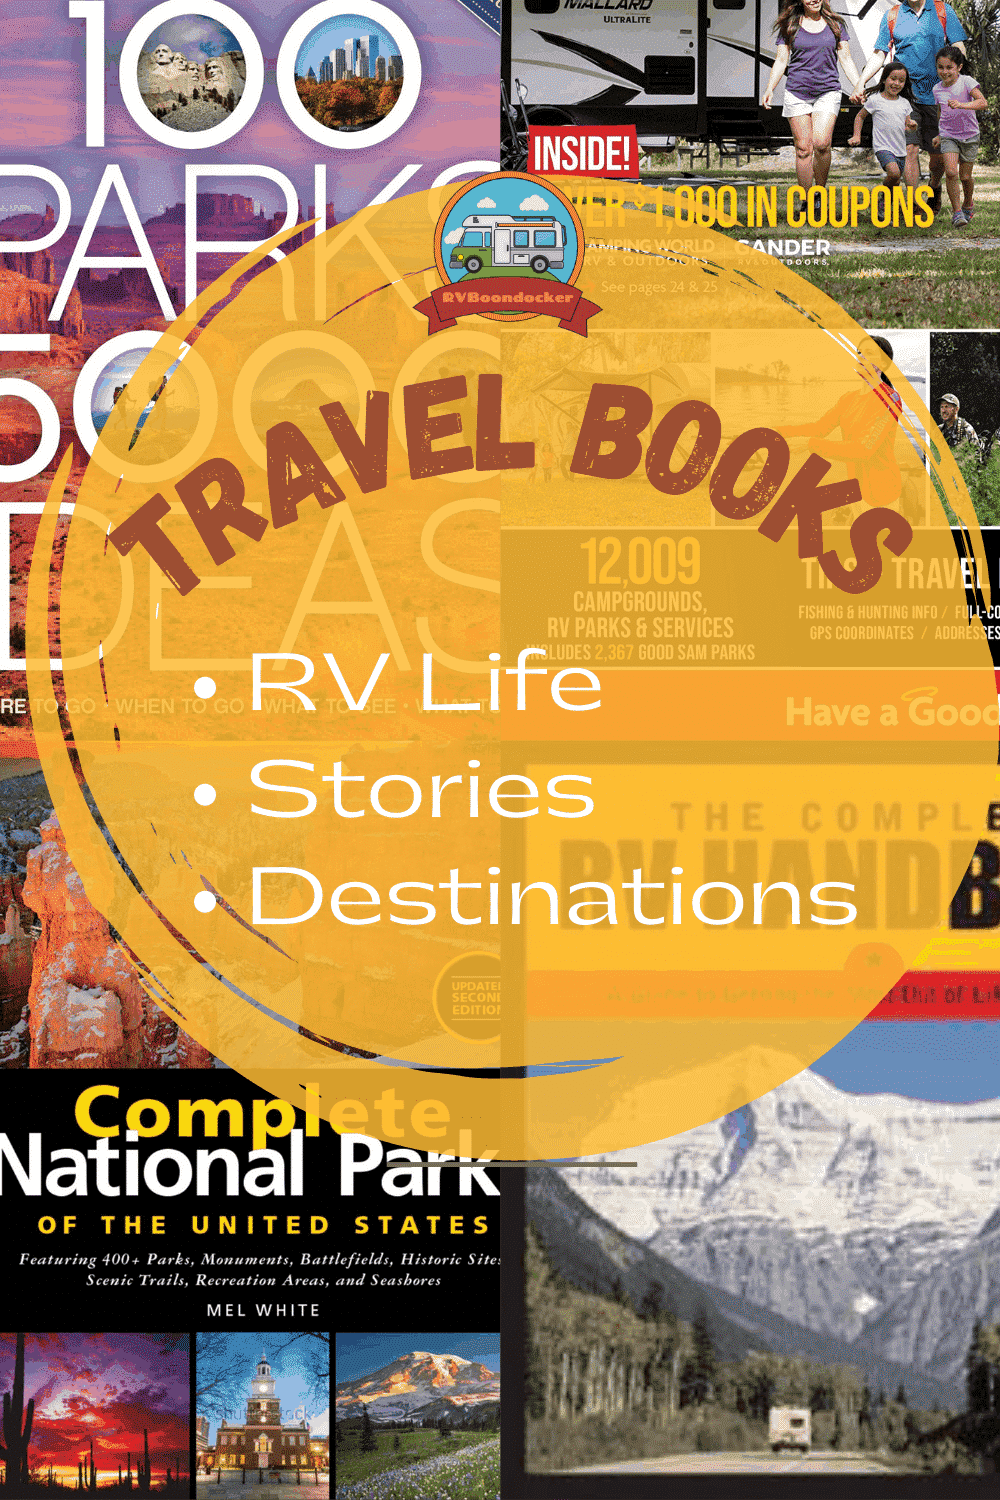 travel books for rv life